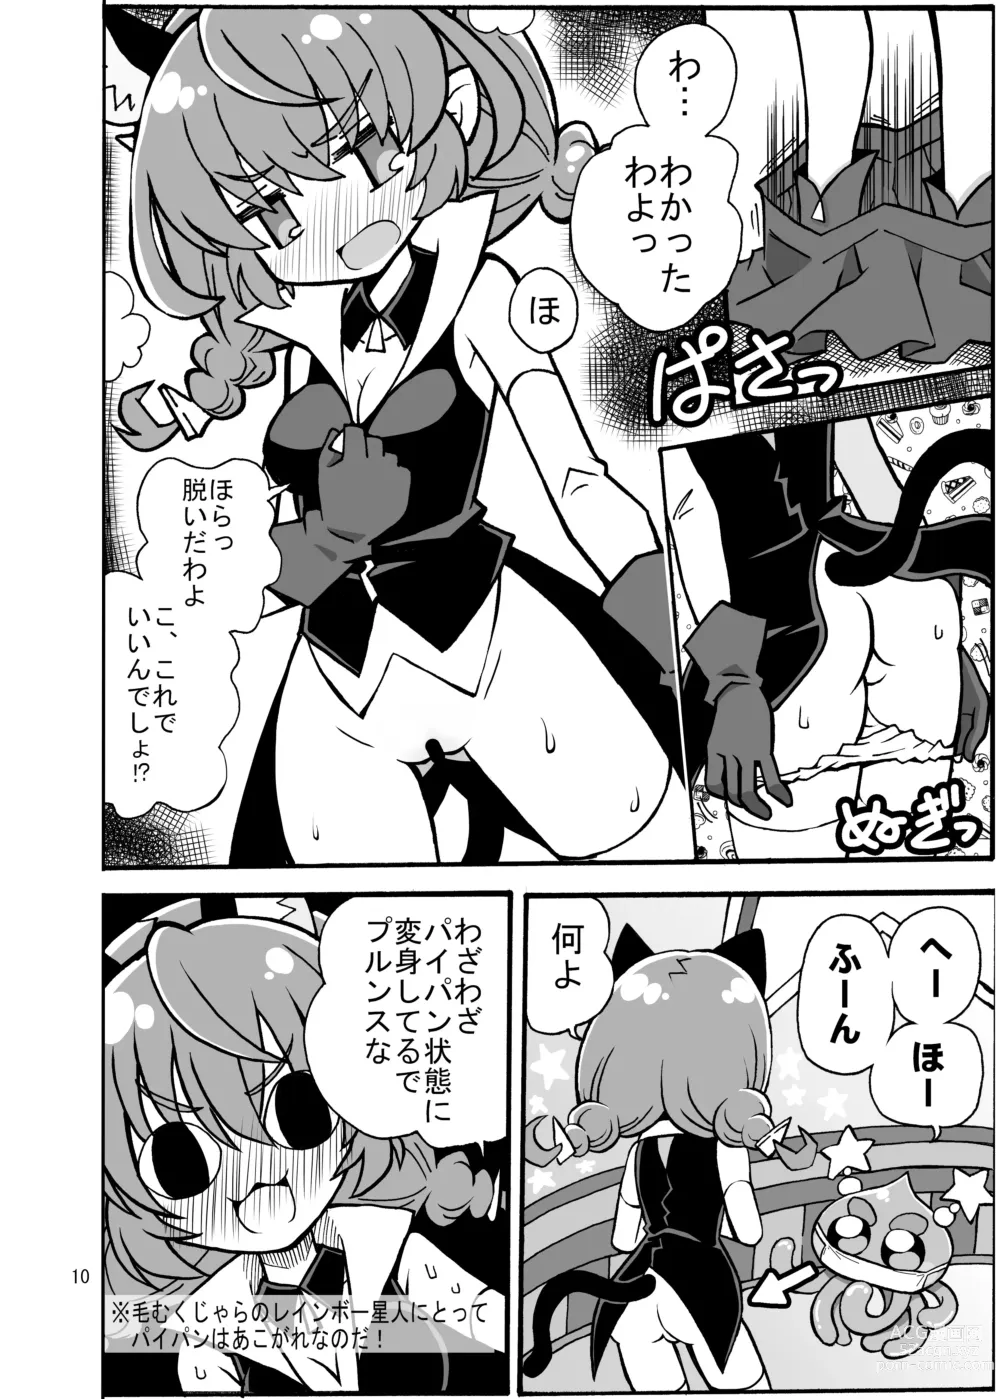 Page 9 of doujinshi Uni Kensa